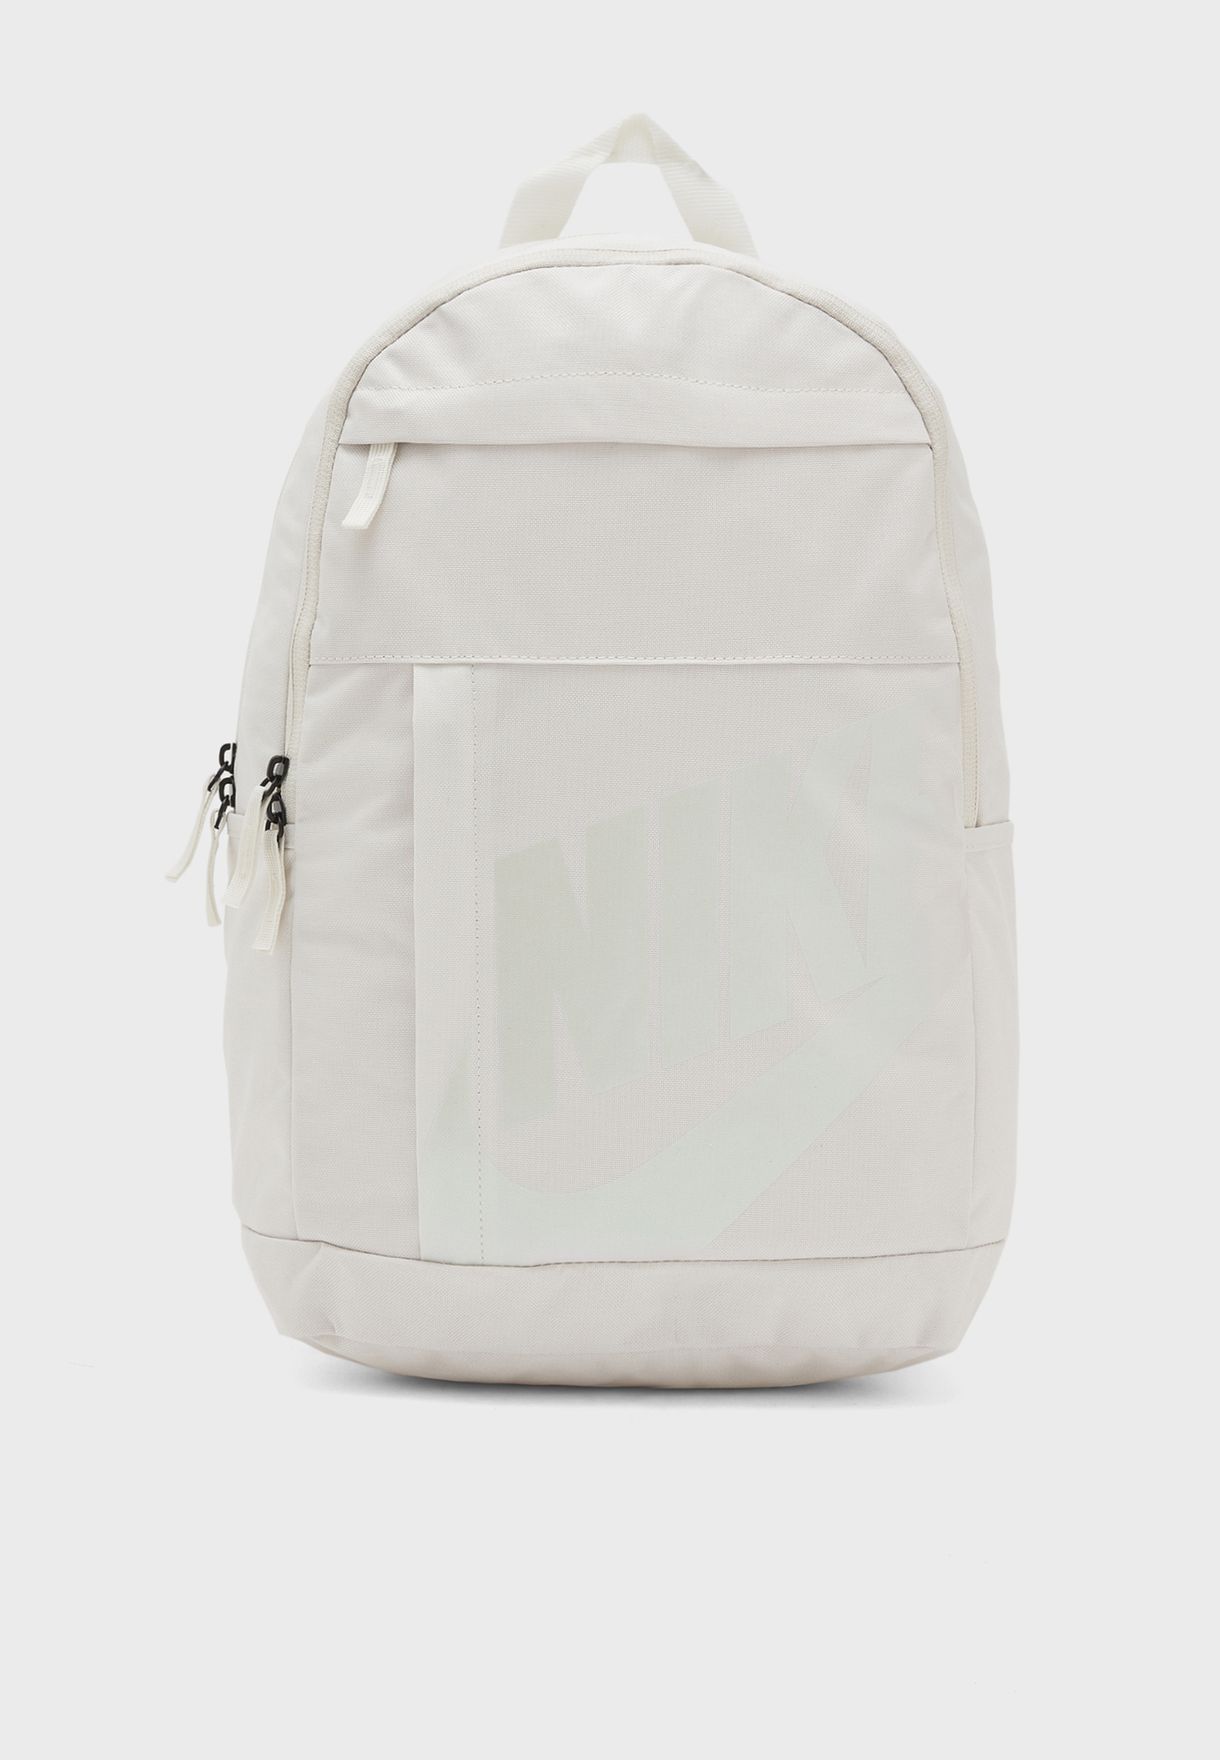 white nike bag